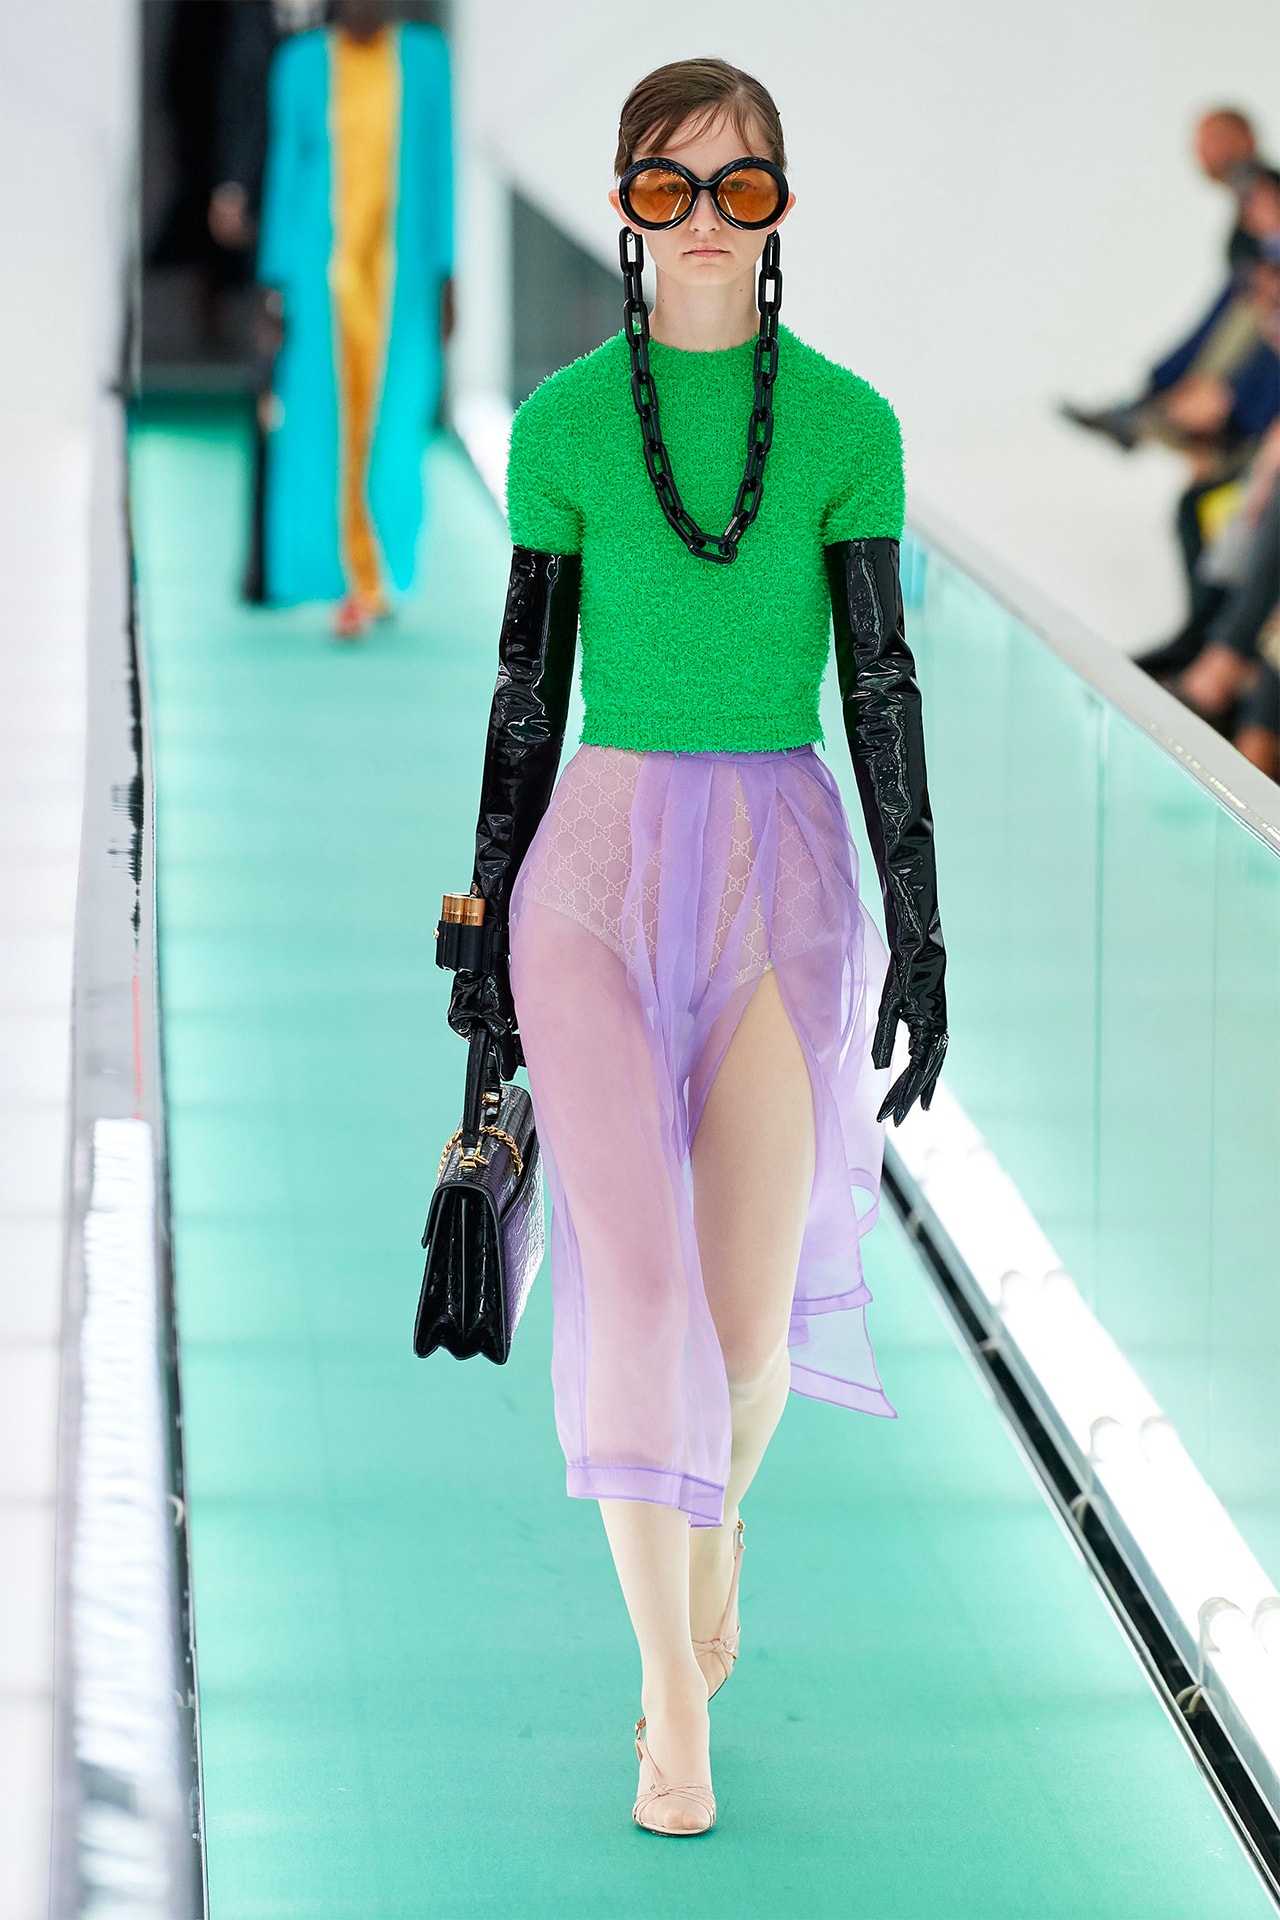 Gucci Orgasmique Spring Summer 2020 Runway Show Milan Fashion Week SS20 green top sheer purple skirt panties underwear